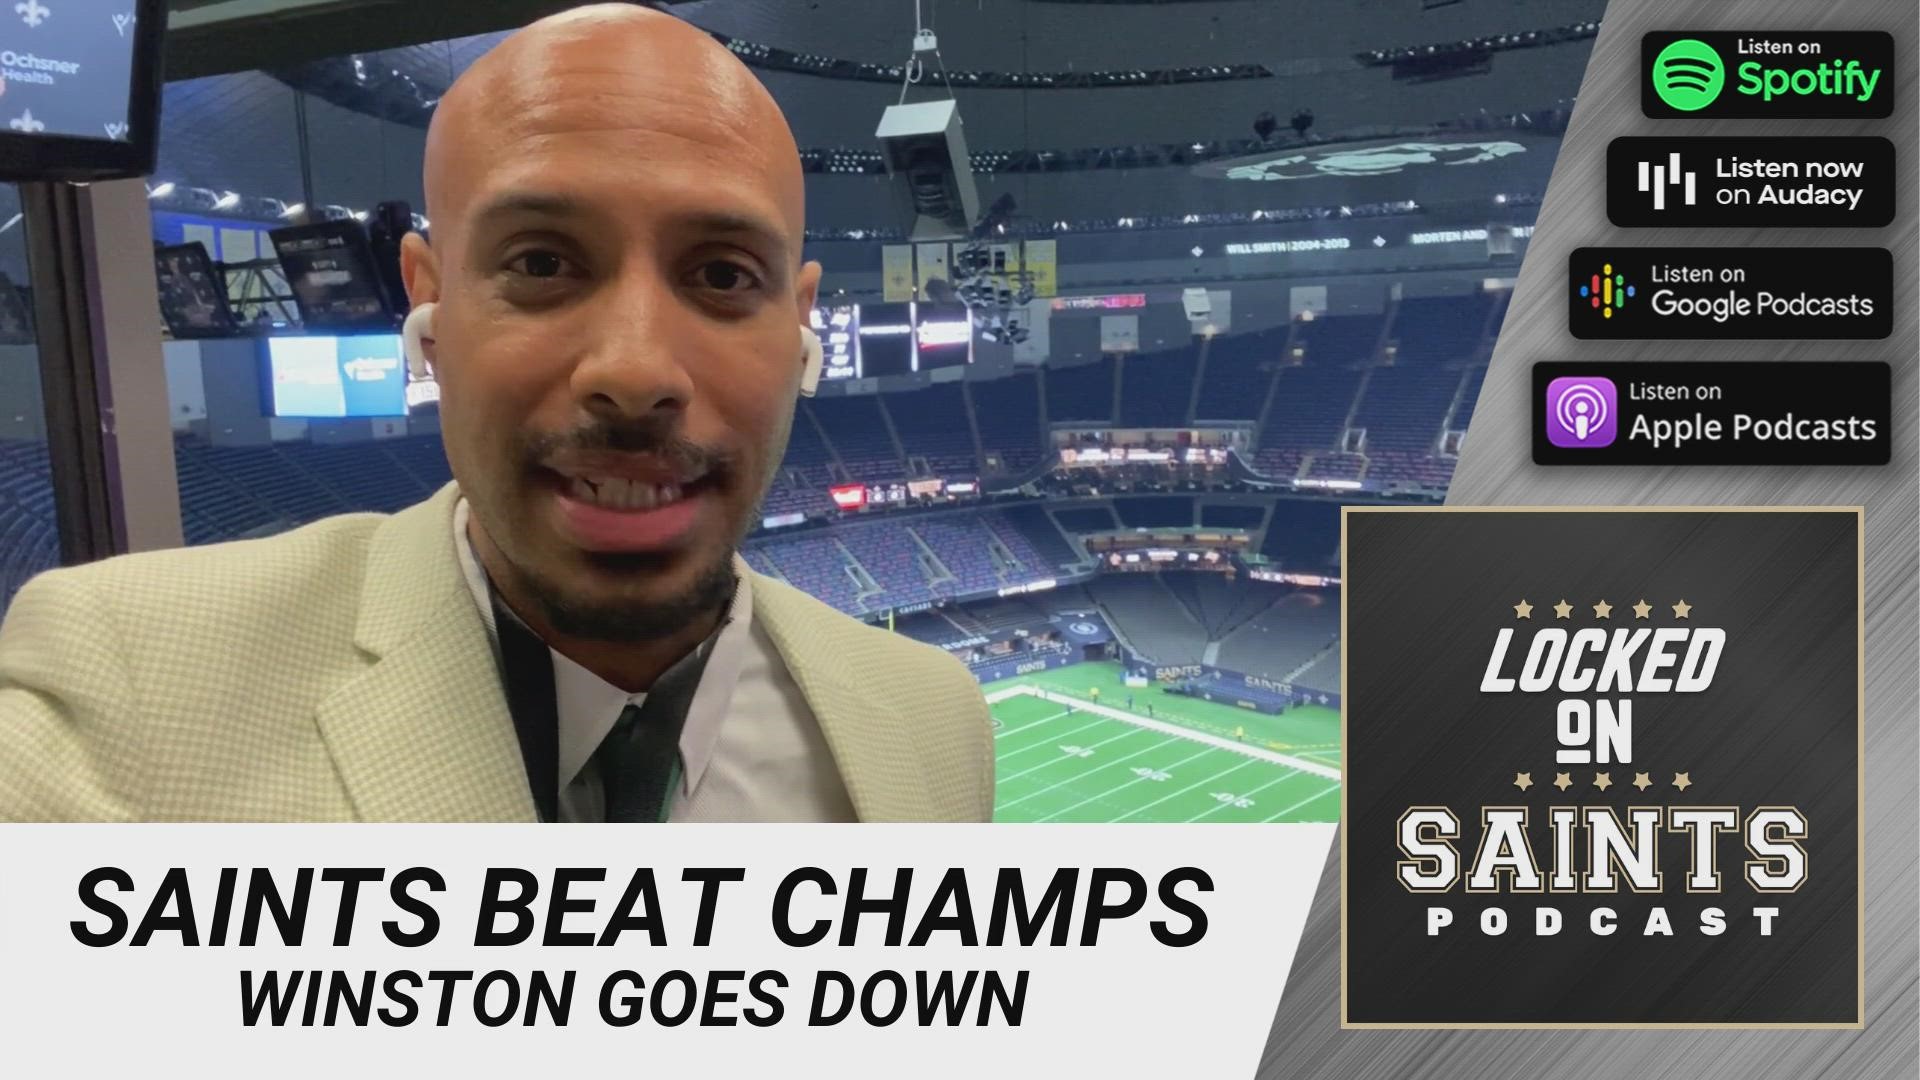 Locked On Saints host Ross Jackson talks the Saints' big win over the Bucs at home on Sunday.